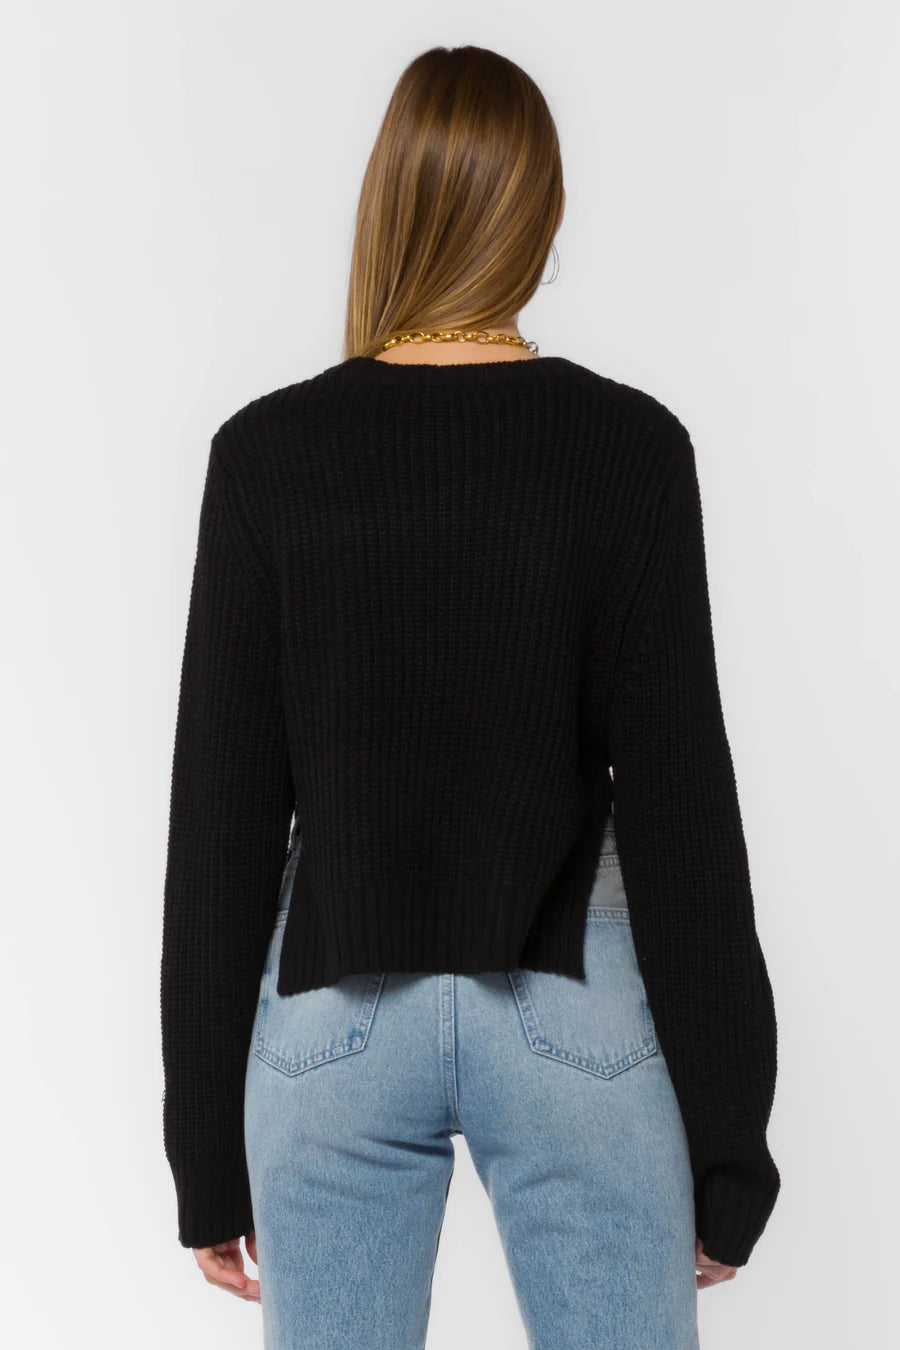 Korina Black Sweater